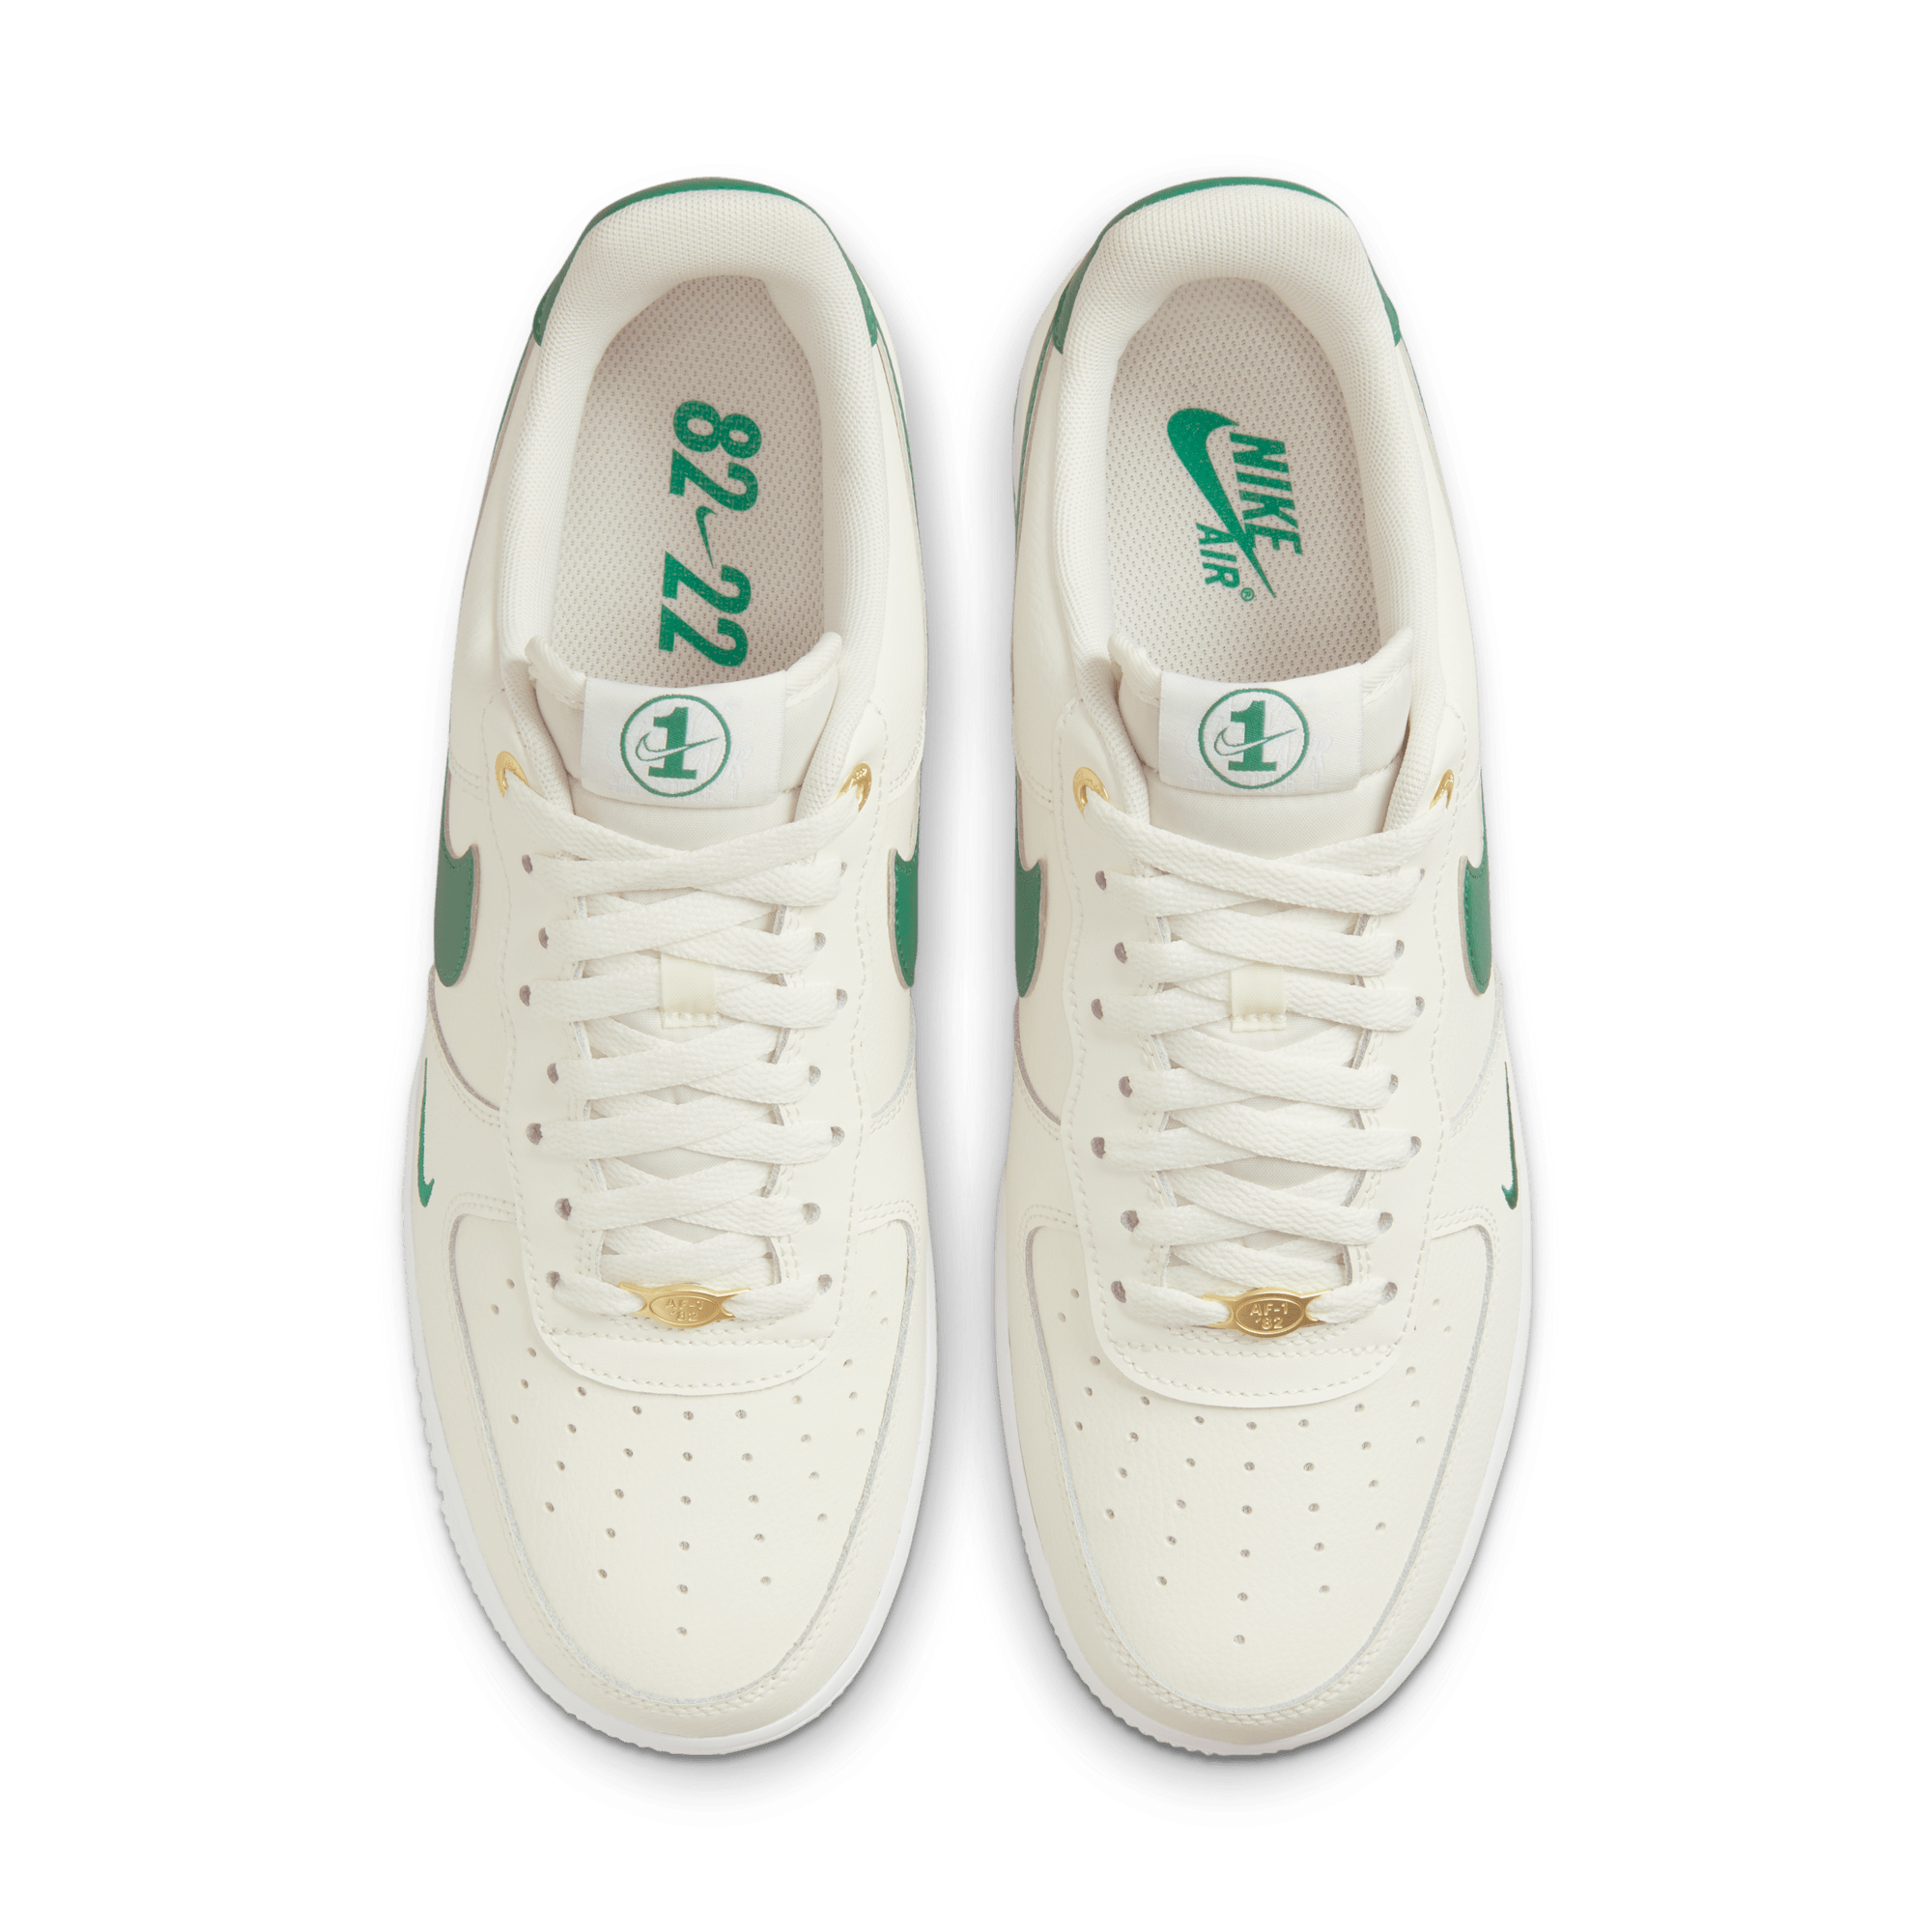 Nike Air Force 1 07 LV8 White Green